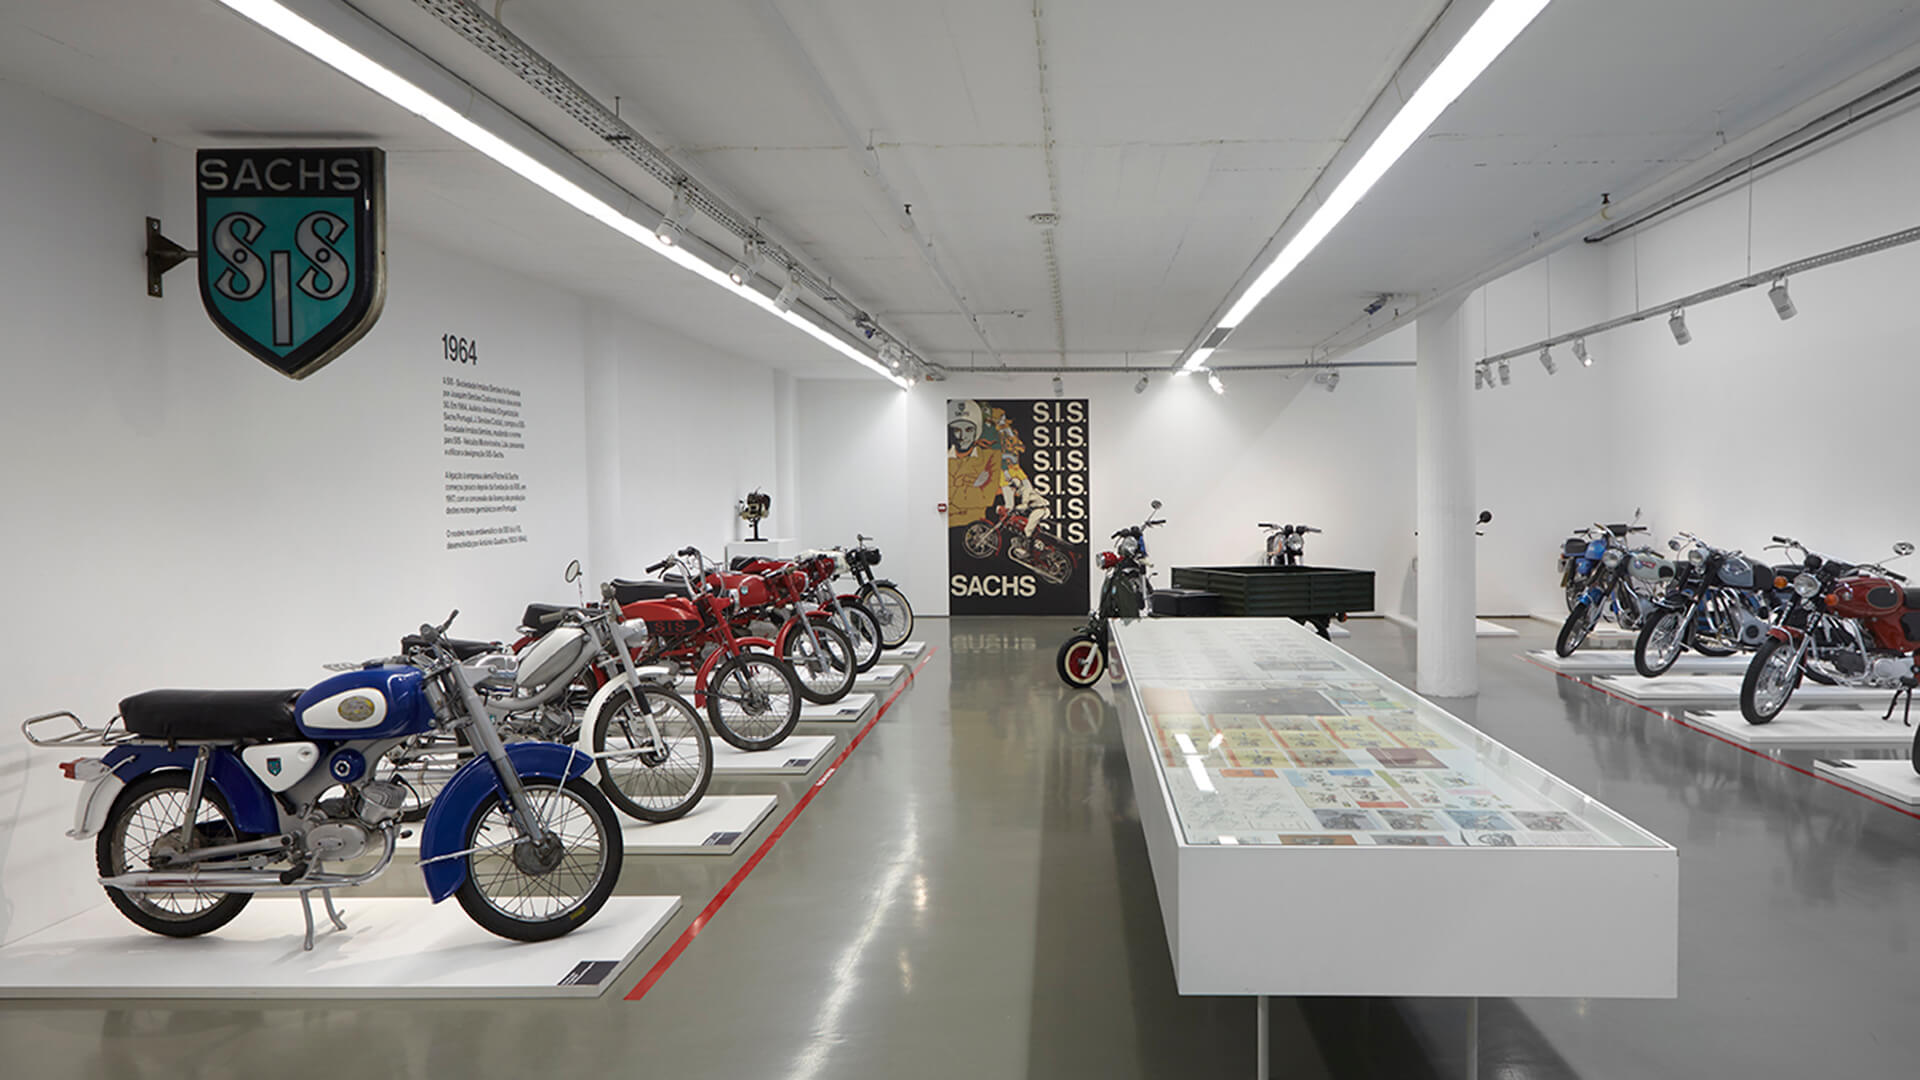 Temporary Exhibition “Motos de Portugal”, 2017-18